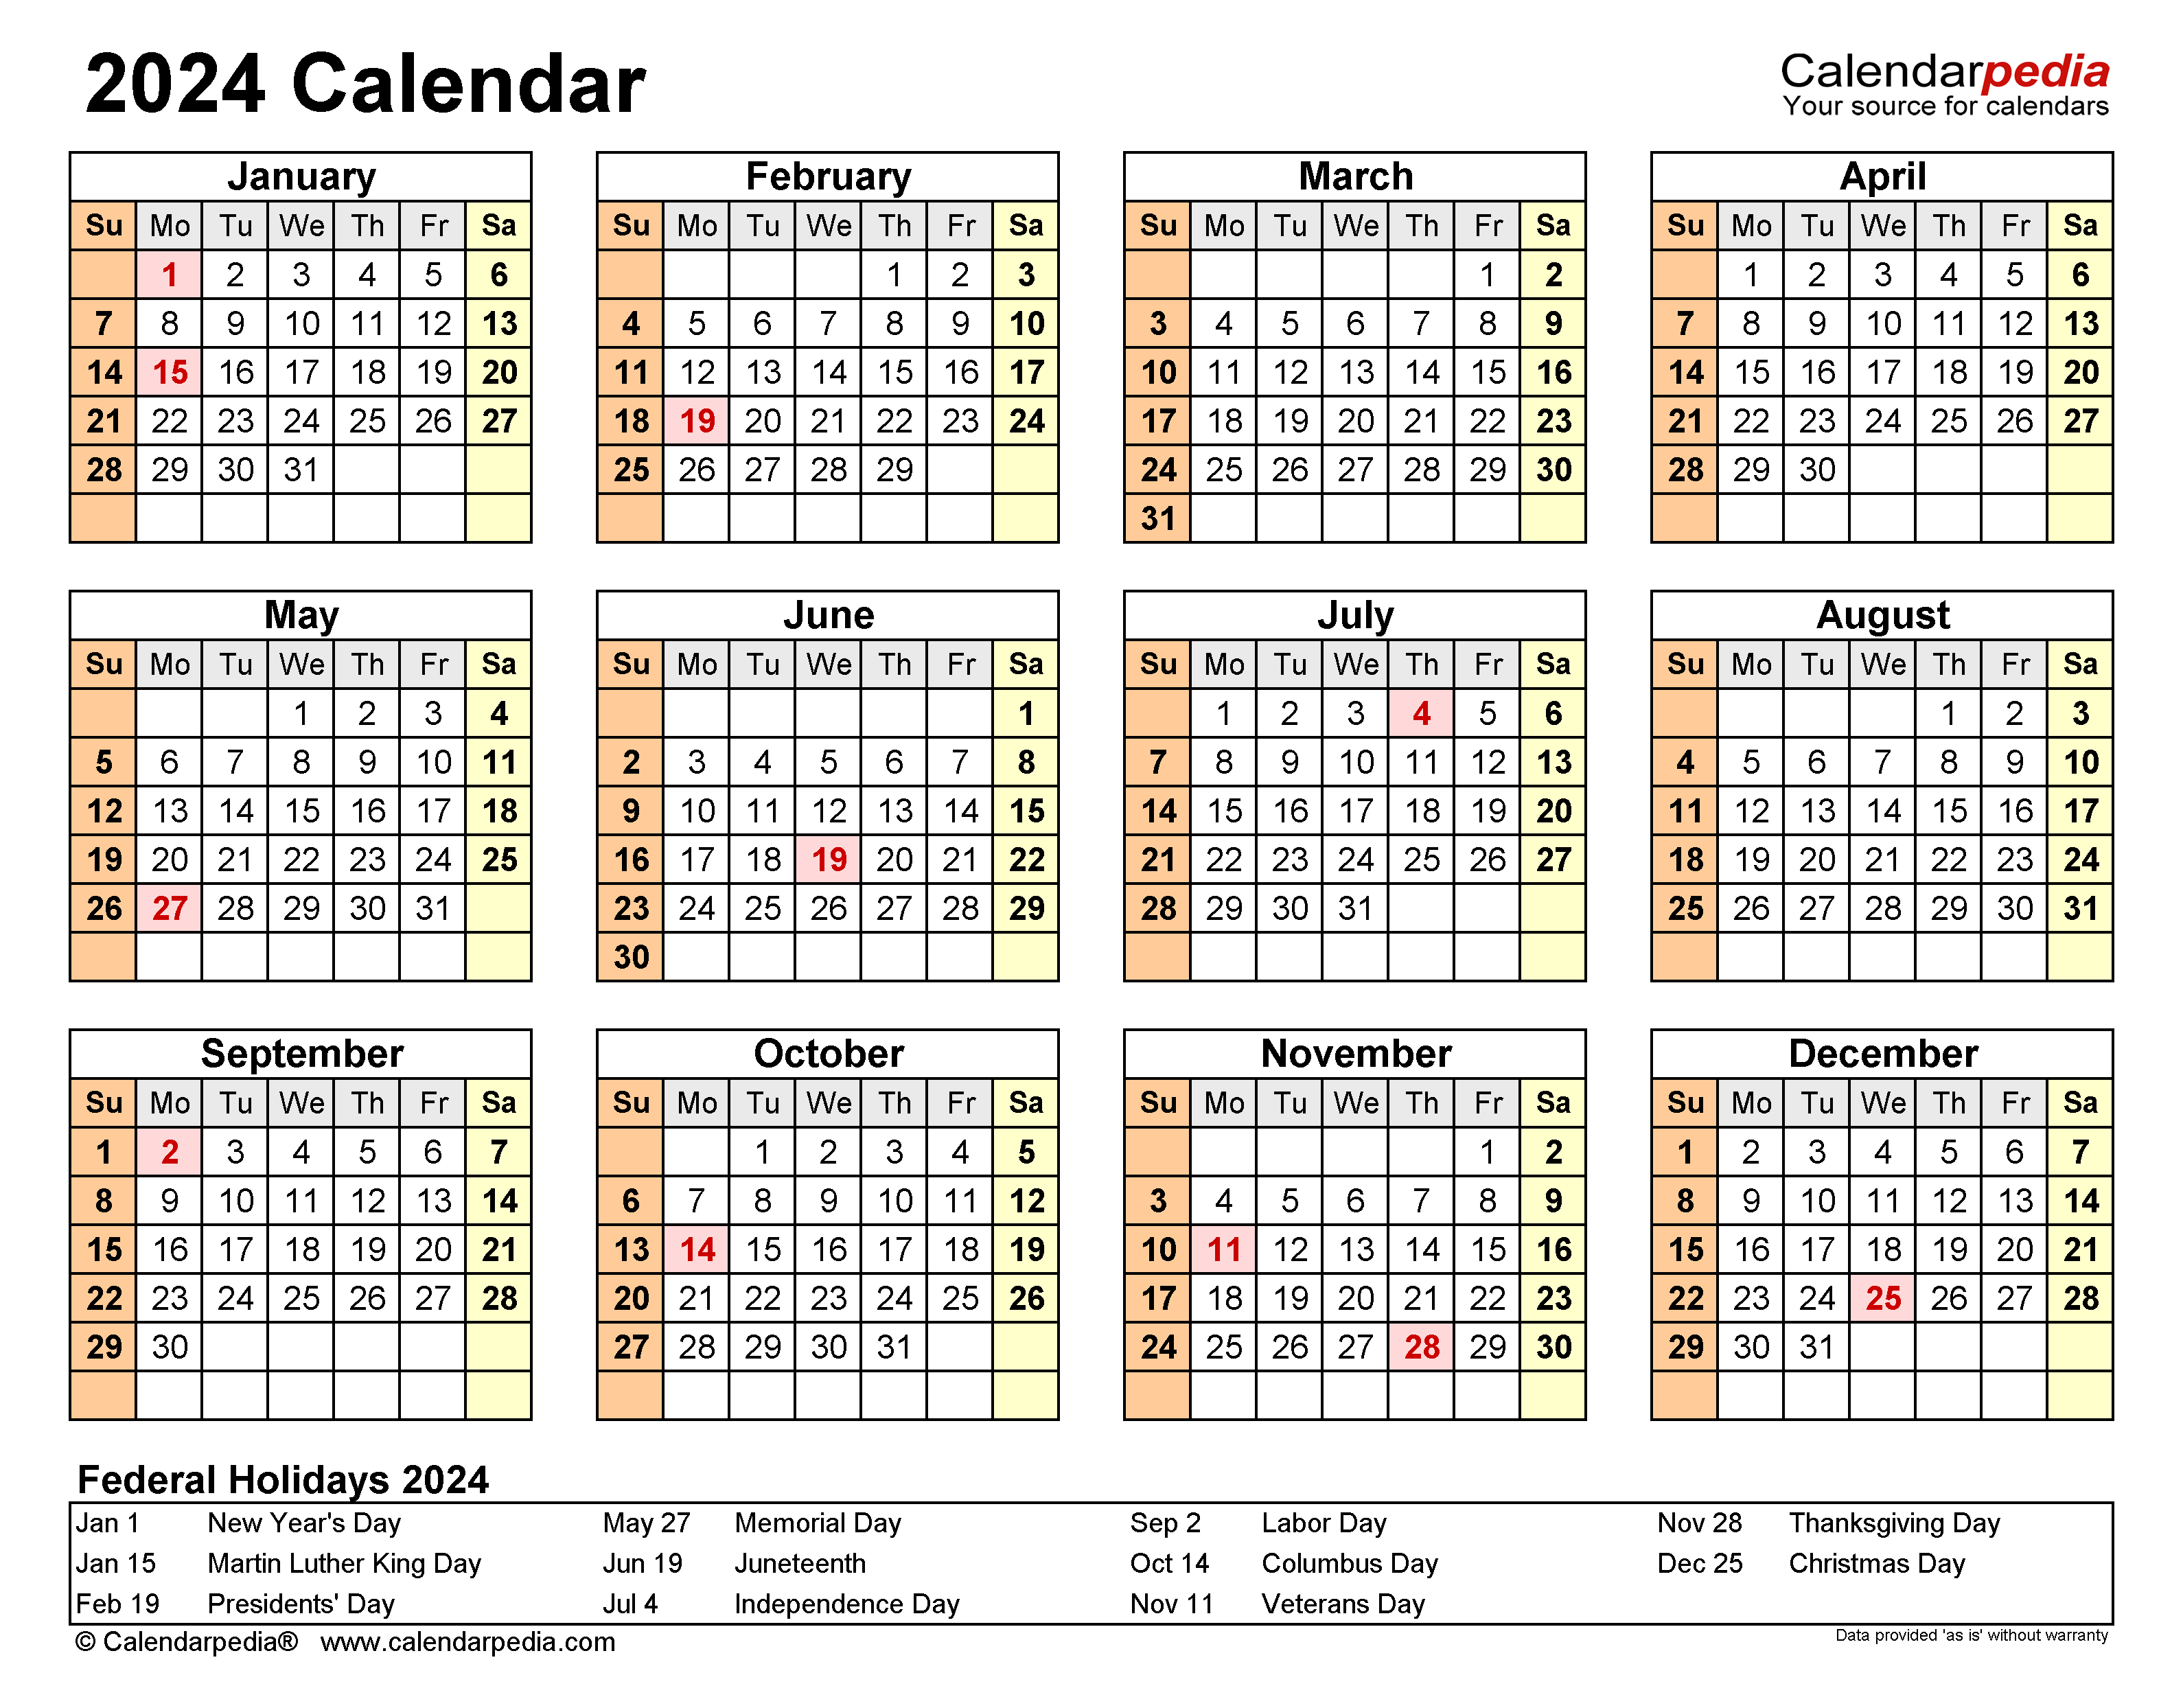 2024 Calendar - Free Printable Excel Templates - Calendarpedia for Excel Printable Calendar 2024